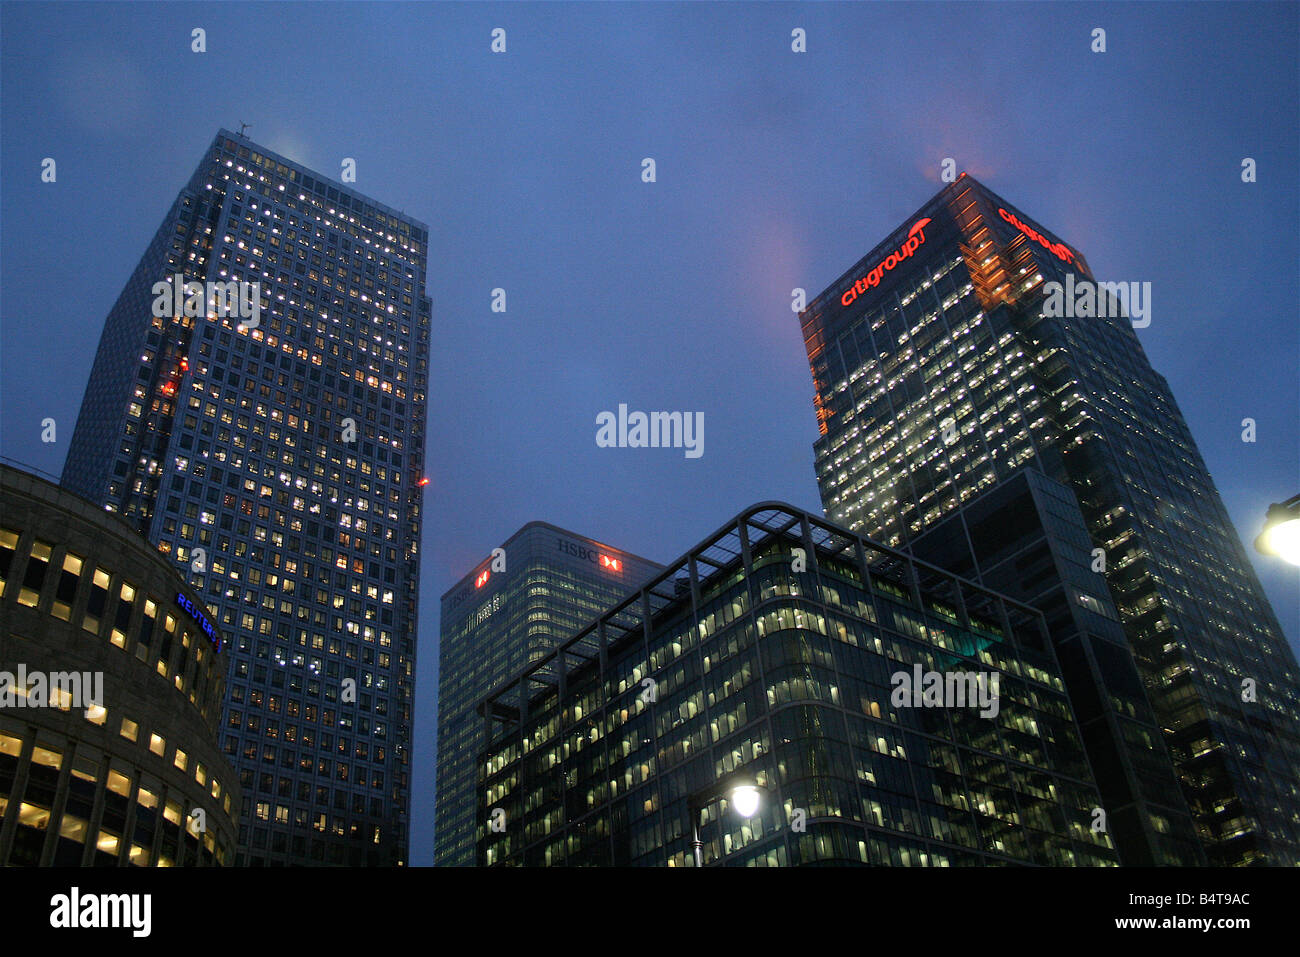 Citibank skyscraper at night in Canary Wharf London Stock Photo